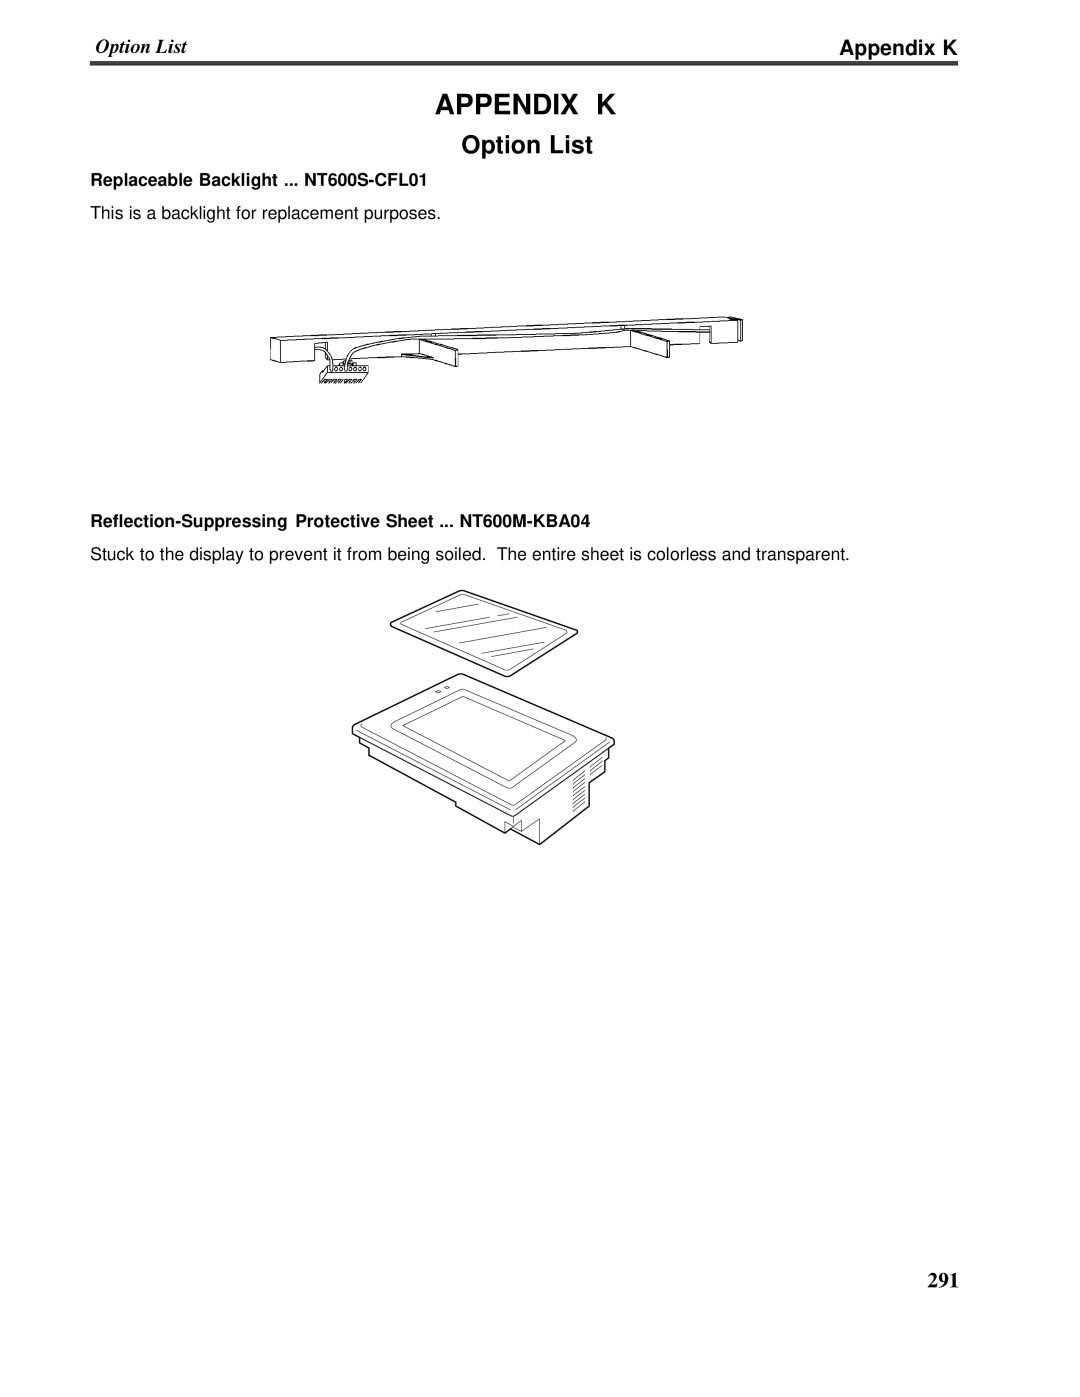 Omron V022-E3-1 operation manual Appendix K, Option List, Replaceable Backlight ... NT600S-CFL01 